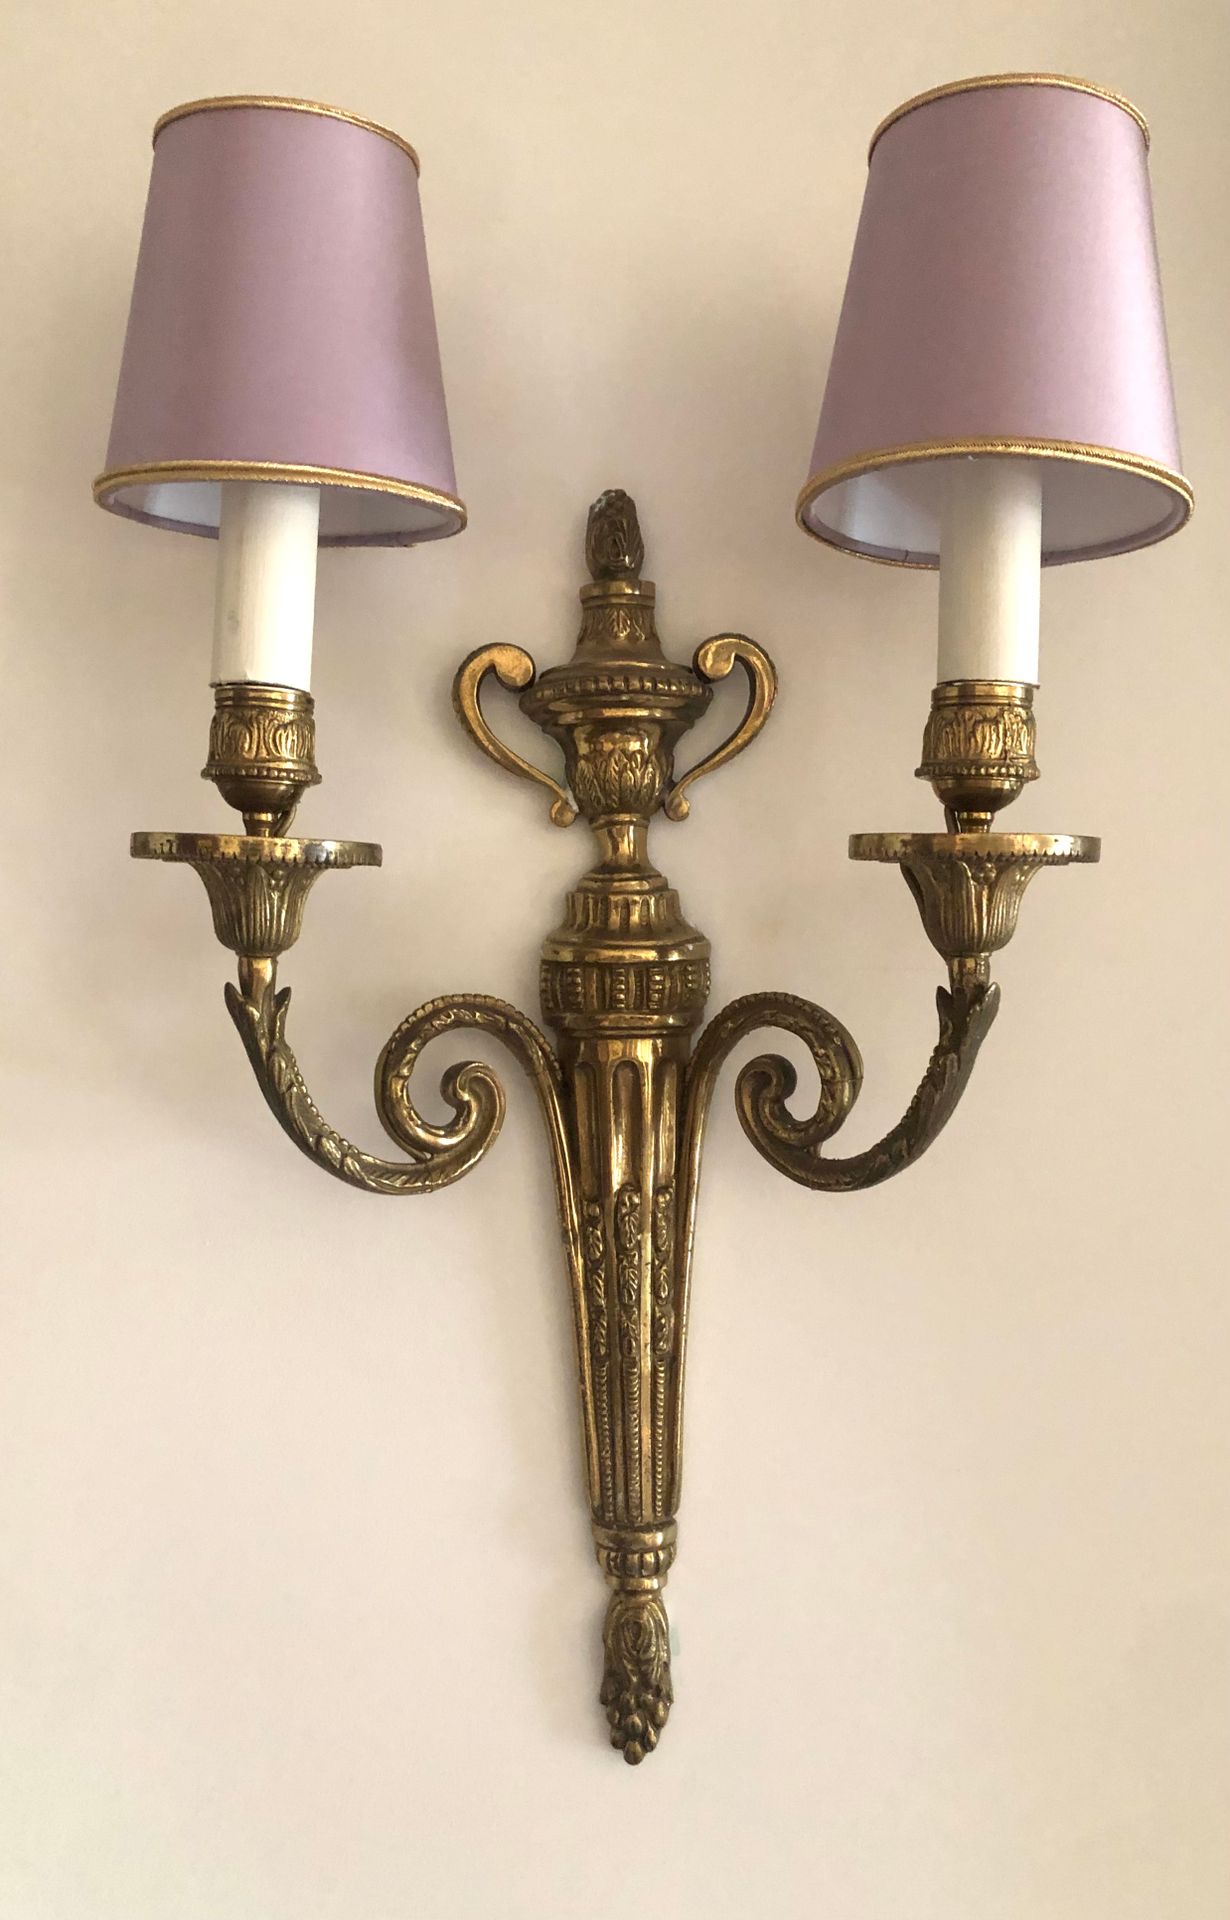 Null 一对双灯带凹槽和镀金的青铜壁炉，装饰有一个鞘，上面有一个卡索。灯罩为淡紫色织物。路易十六的风格。高度：40厘米。高度：40厘米。